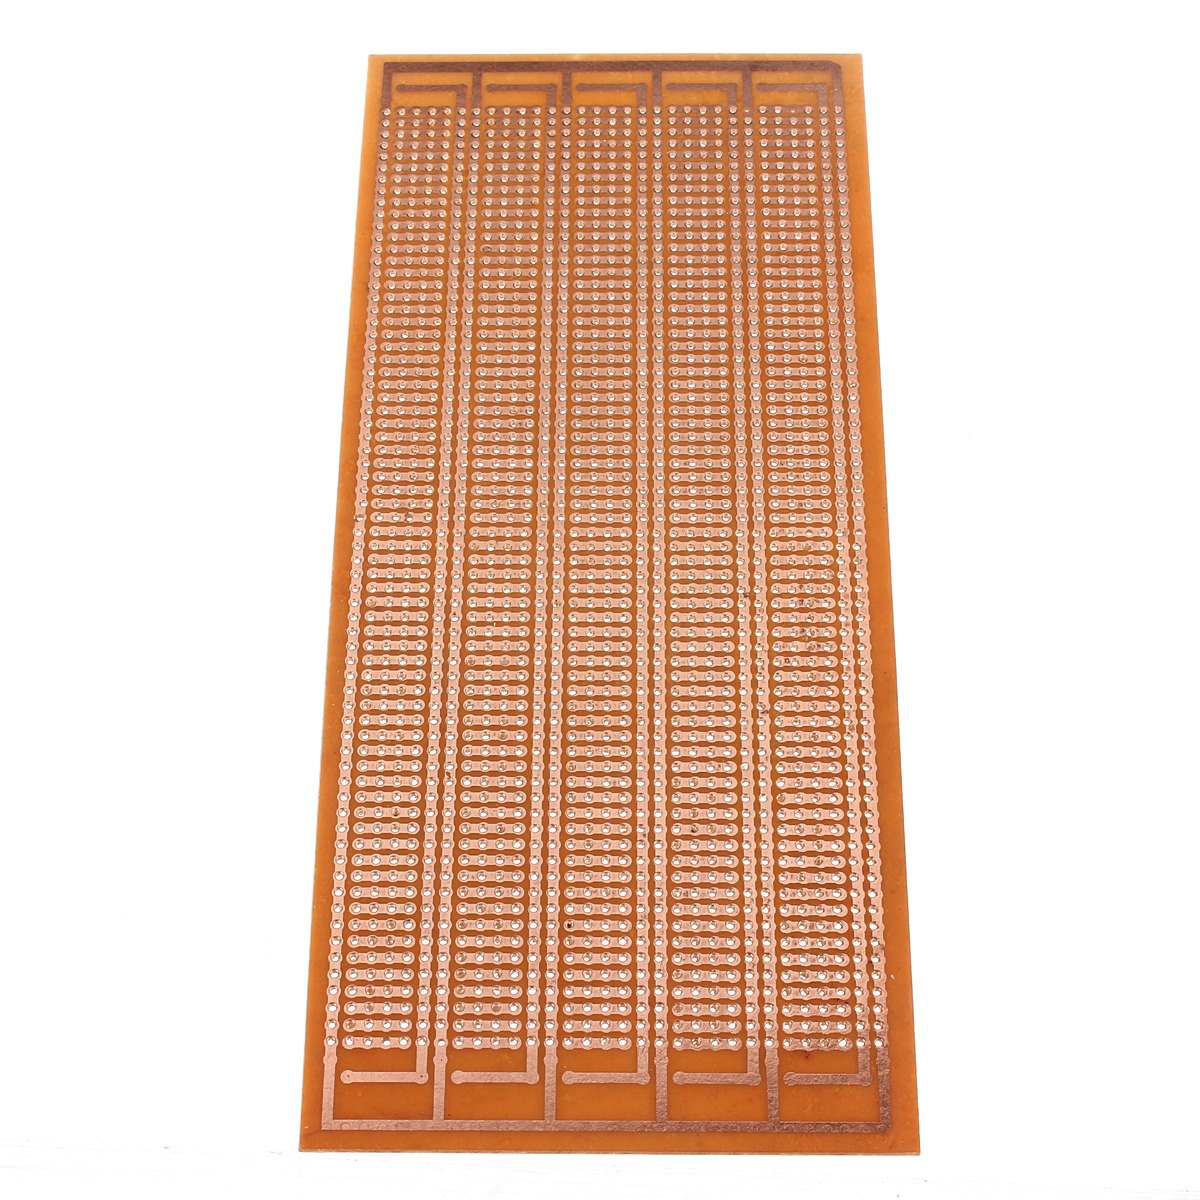 1pc PCB Prototype Printed Circuit Board Universal Matrix Stripboard DIY 8.5x20cm Single Side Copper PCB